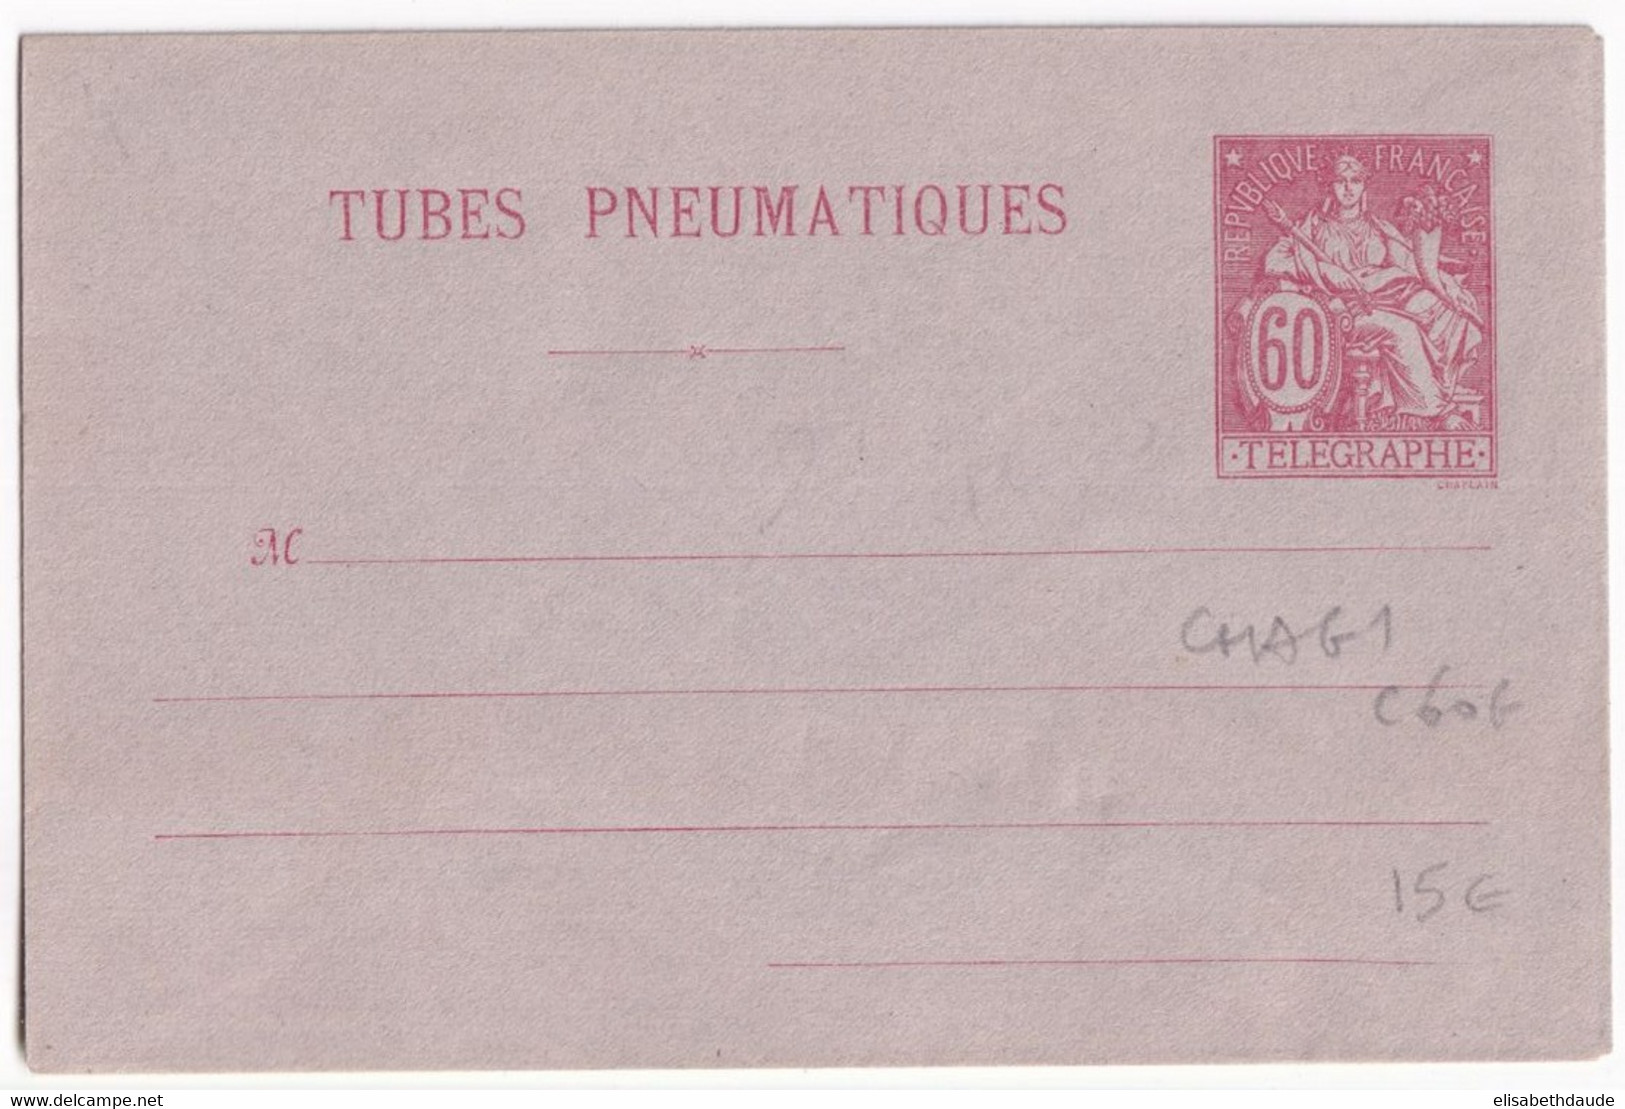 PNEUMATIQUE - 1889 - ENVELOPPE ENTIER POSTAL TYPE CHAPLAIN - STORCH G1 - NEUVE - COTE 2005 = 60 EUR. - Pneumatische Post